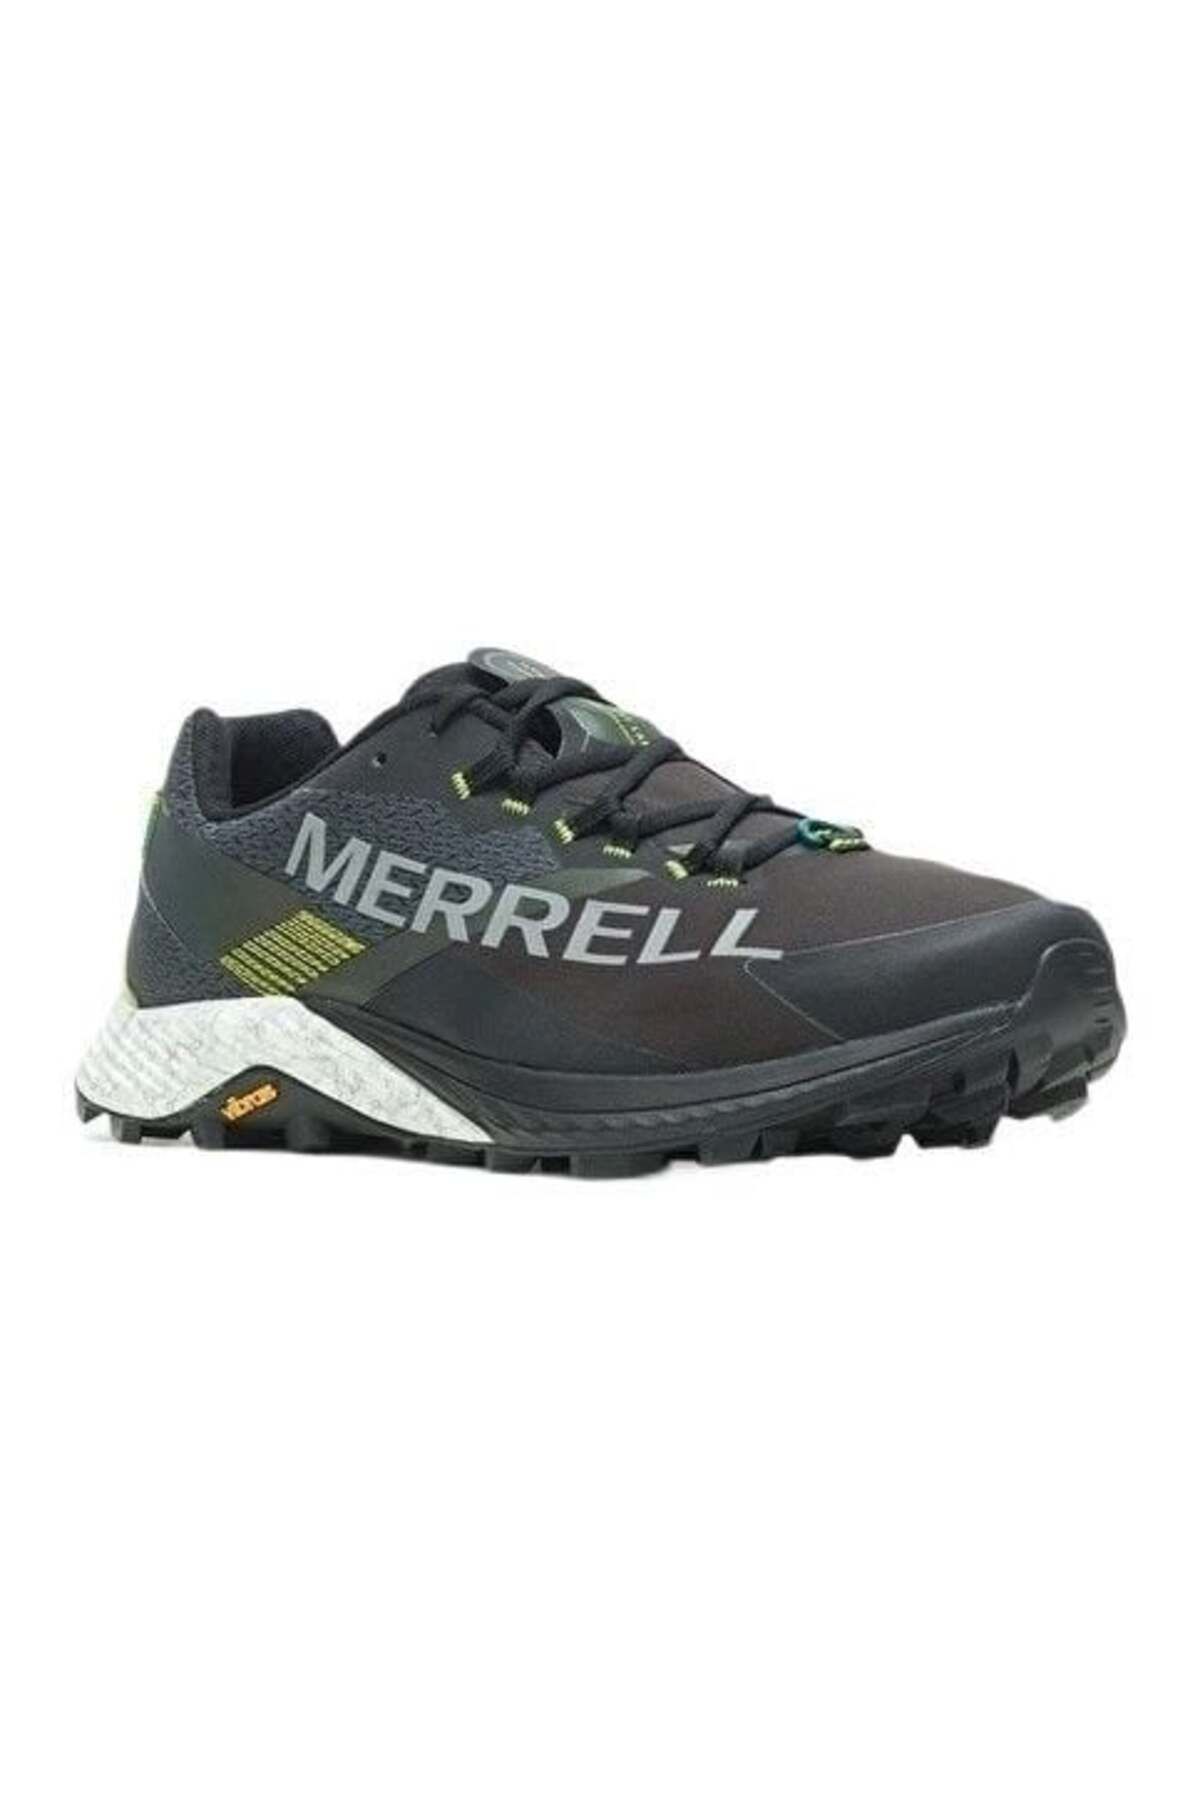 Merrell Mtl Long Sky 2 Shield Erkek Siyah Spor Ayakkabı J067365-27303